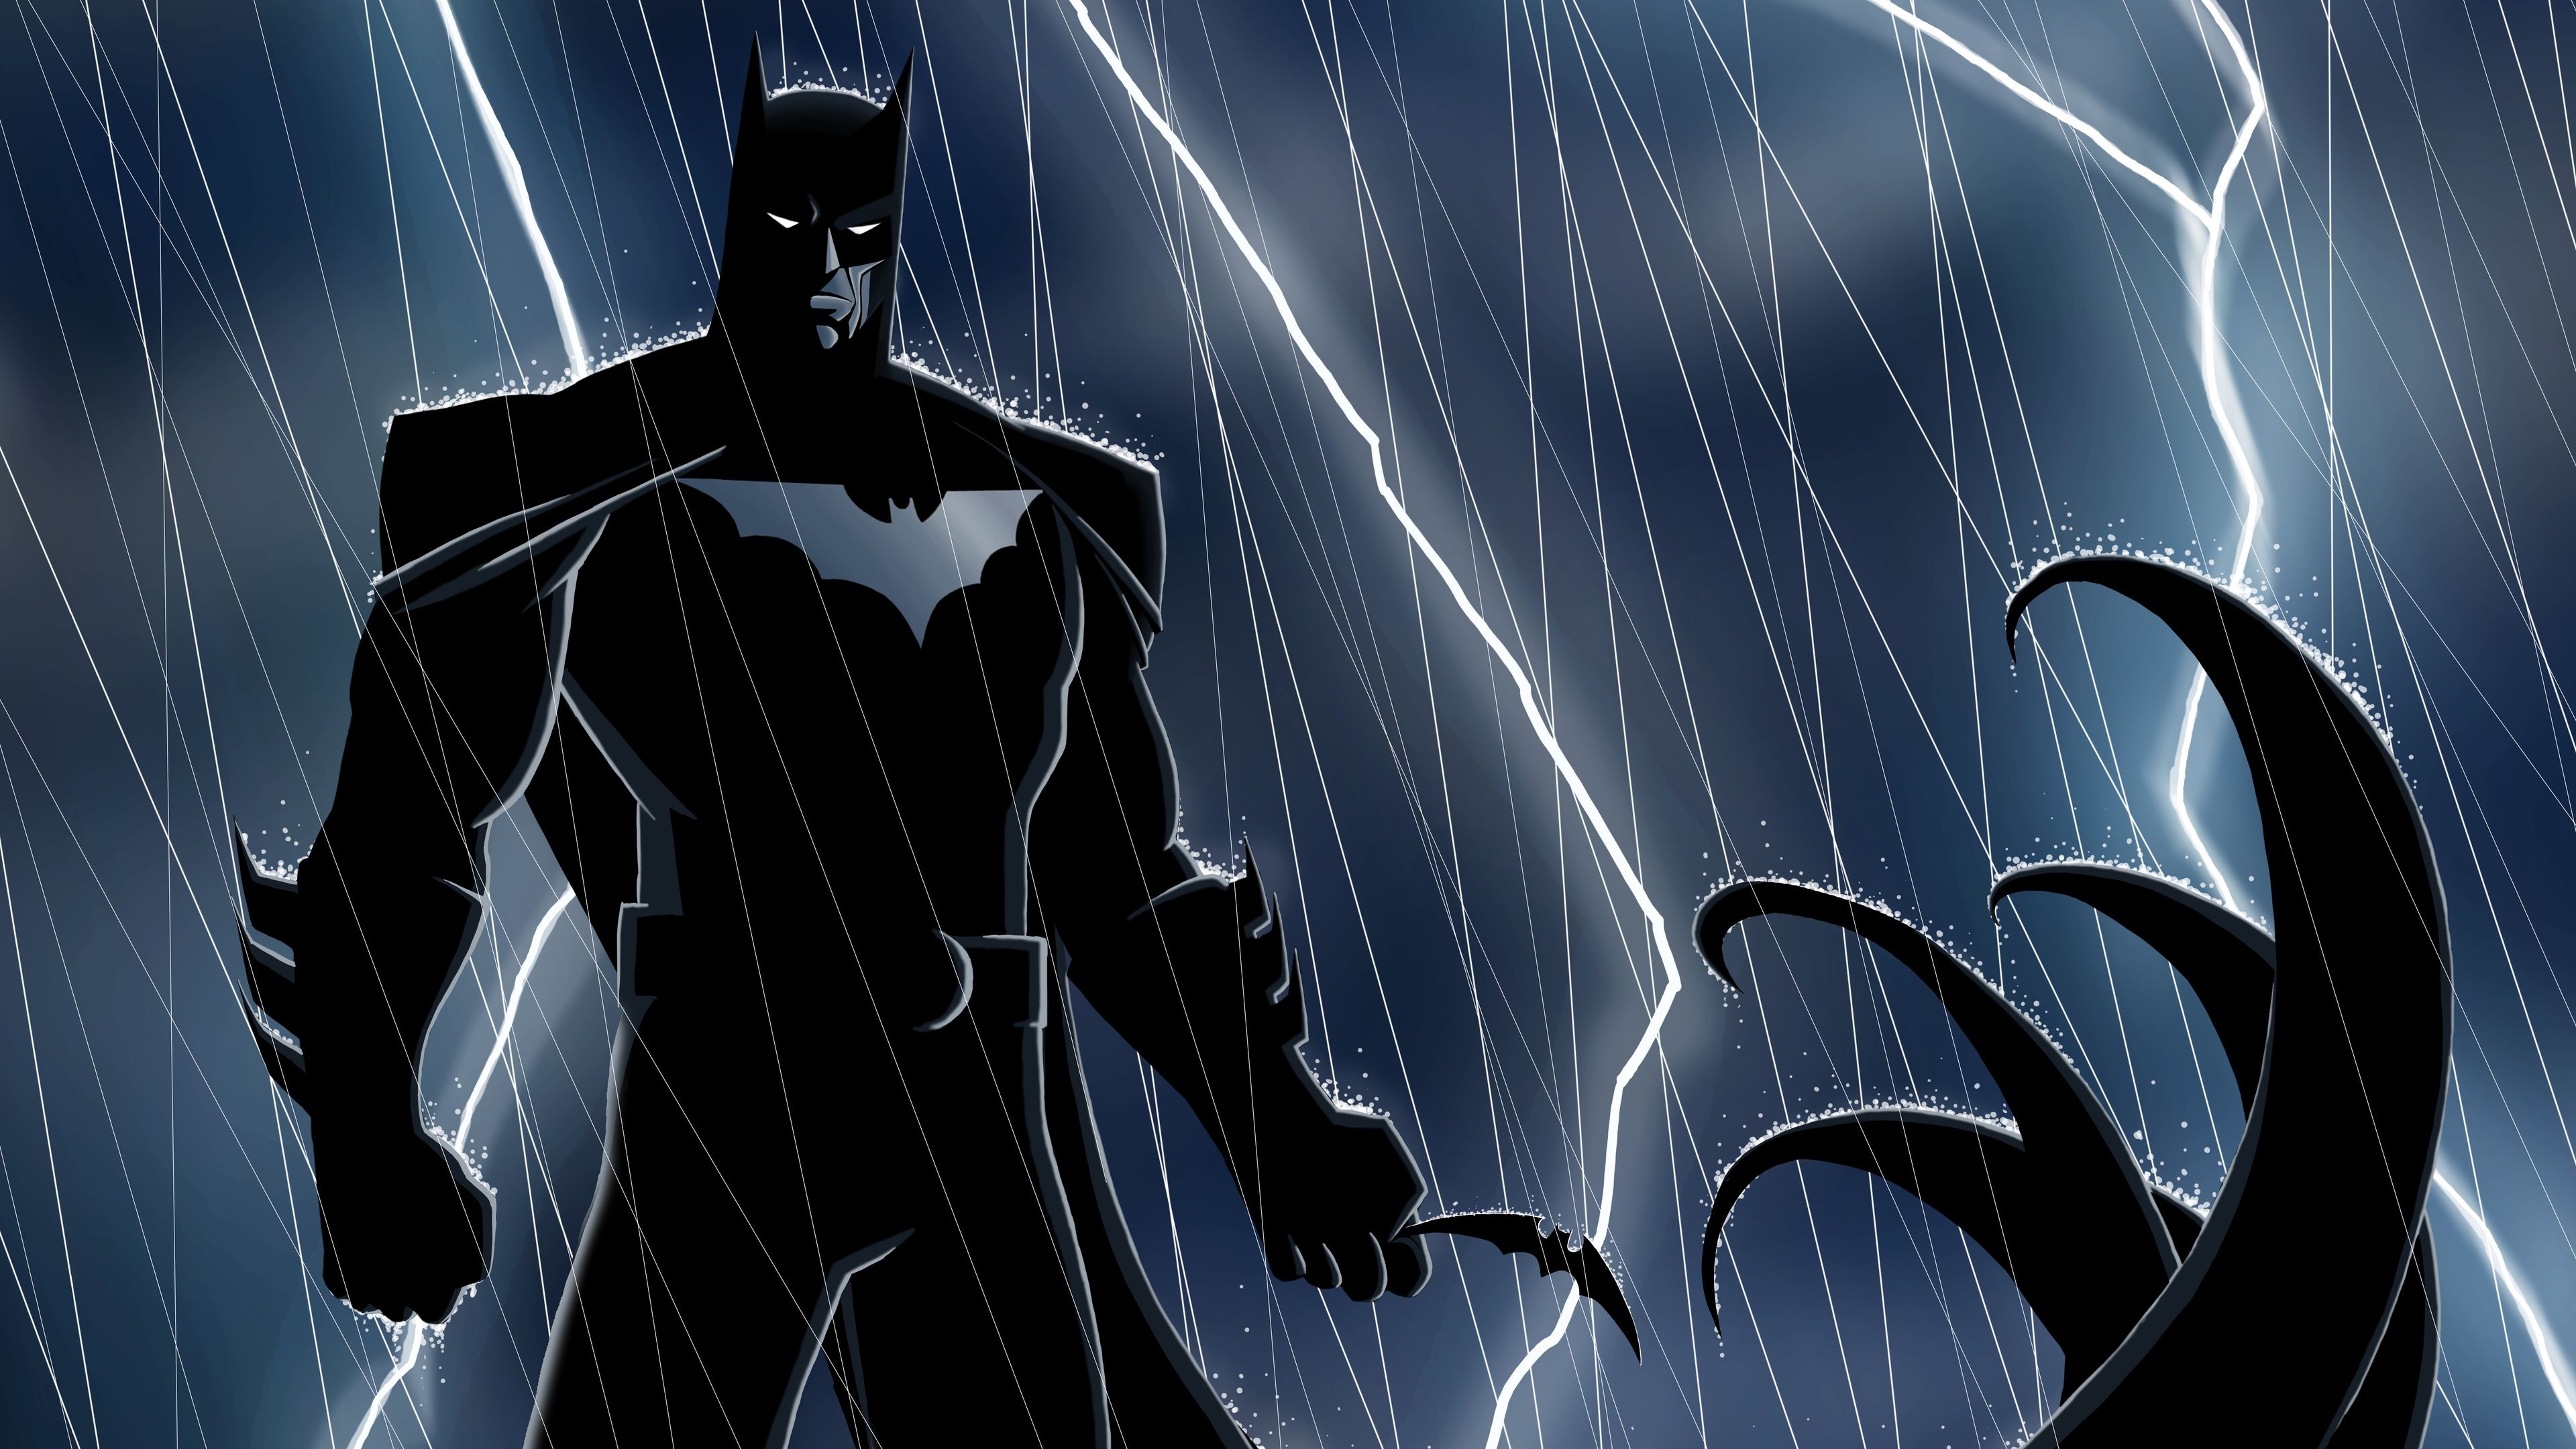 Batman, Bat signal, Nighttime Gotham, Superhero angst, Comic saga, 3840x2160 4K Desktop